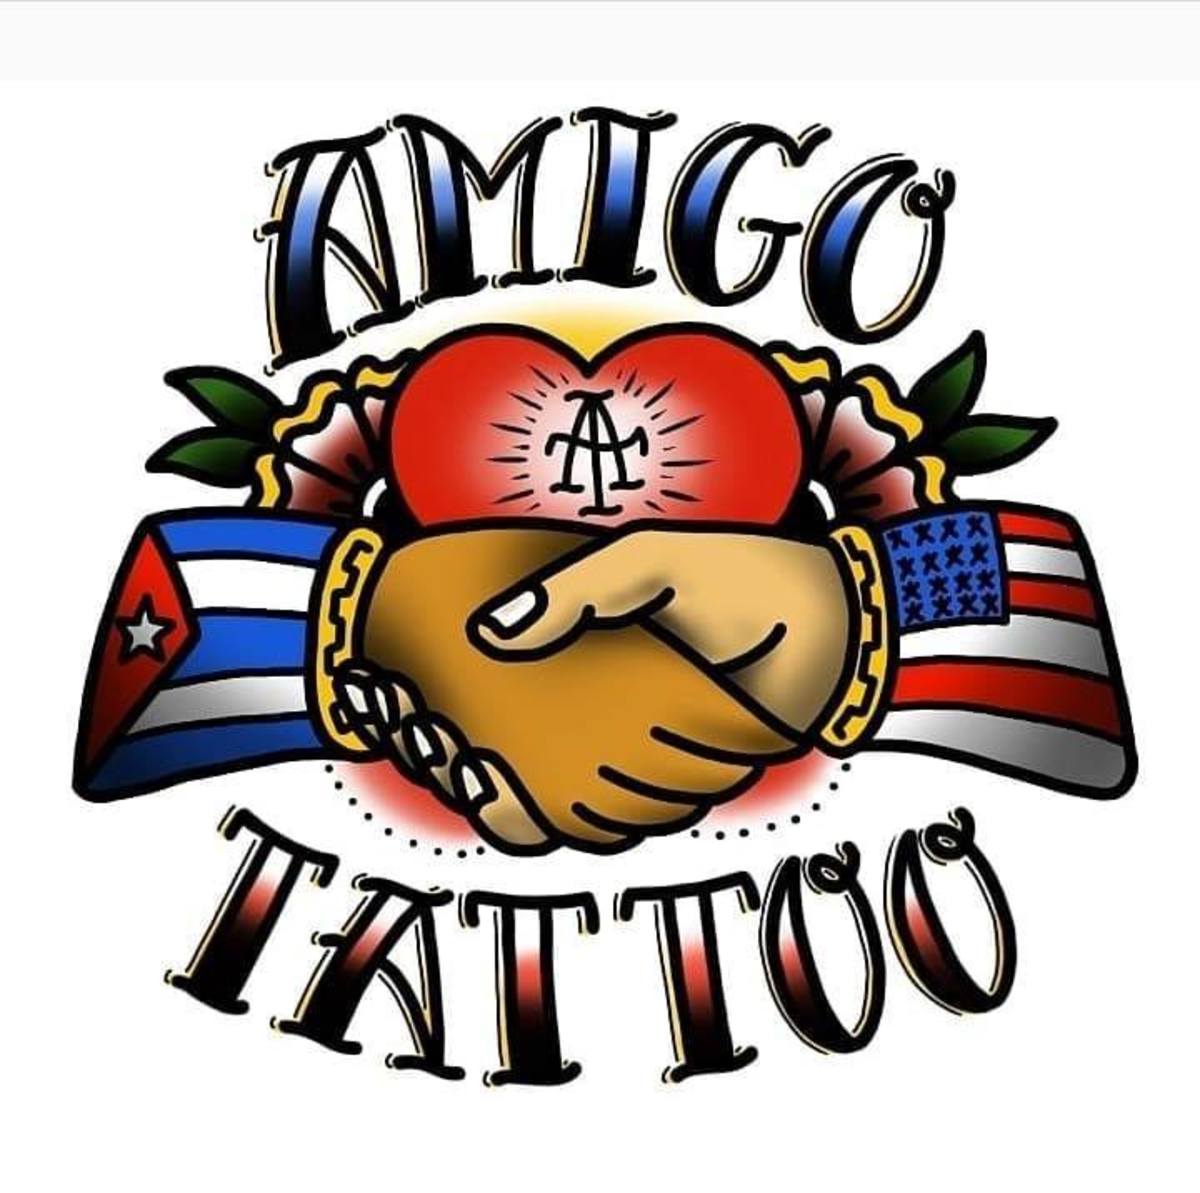 James Langner, Amigo Tattoos, Atomic Tattoos, James Langner Atom Tattoos, James Langner Amigo Tattoos, Küba bant dövmeleri, Küba'da yasadışı dövmeler, tampa sanatçıları, küba dövmeleri, mürekkepli dergi